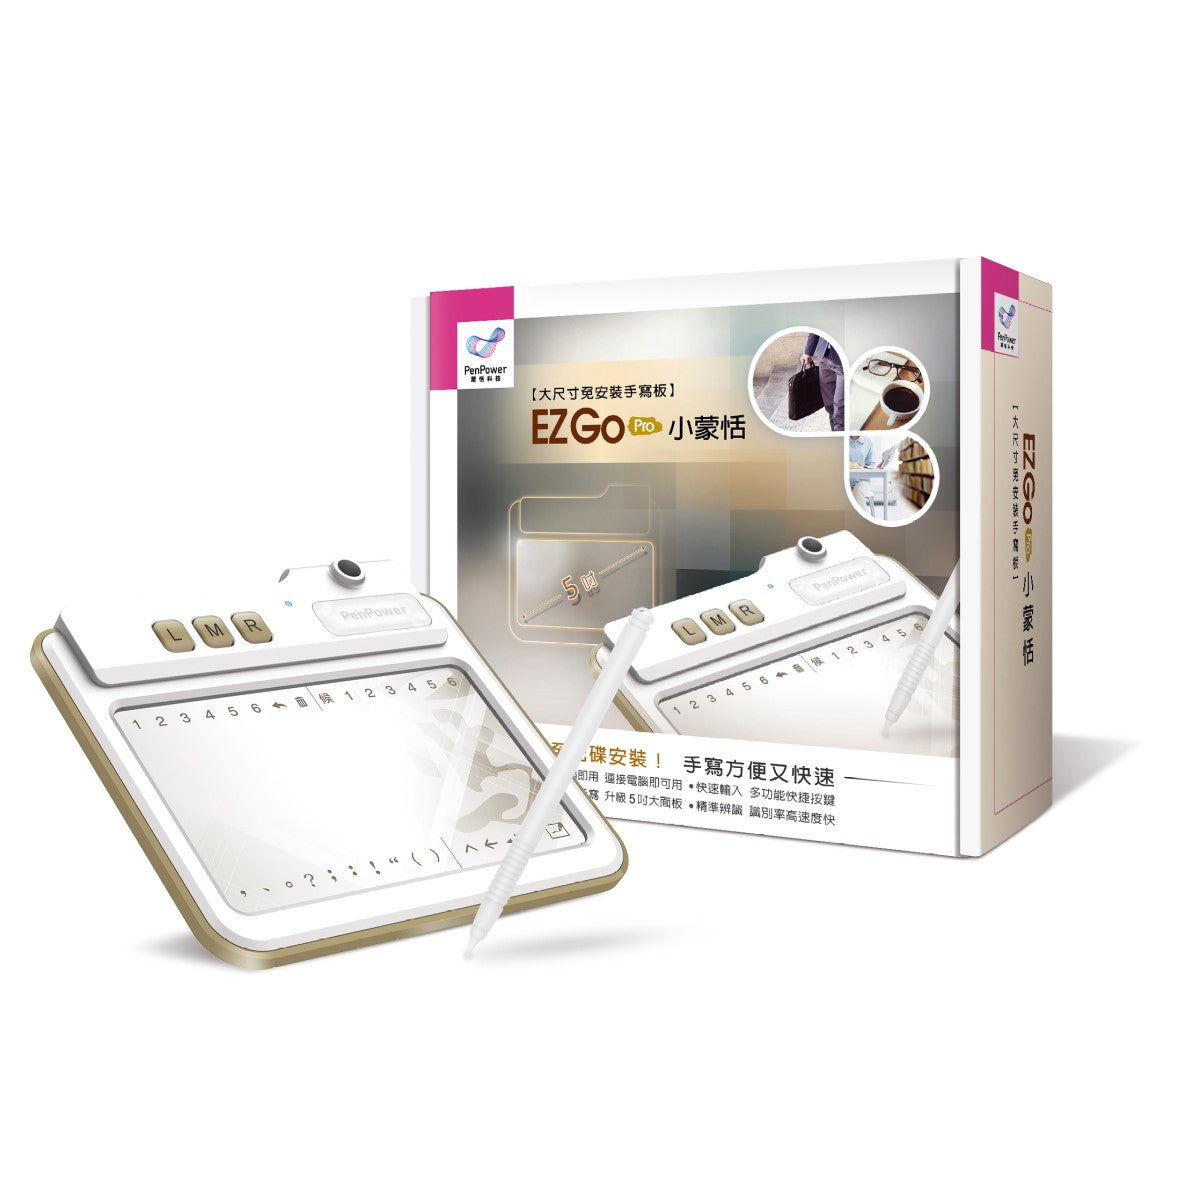 EZ Go Pro Box